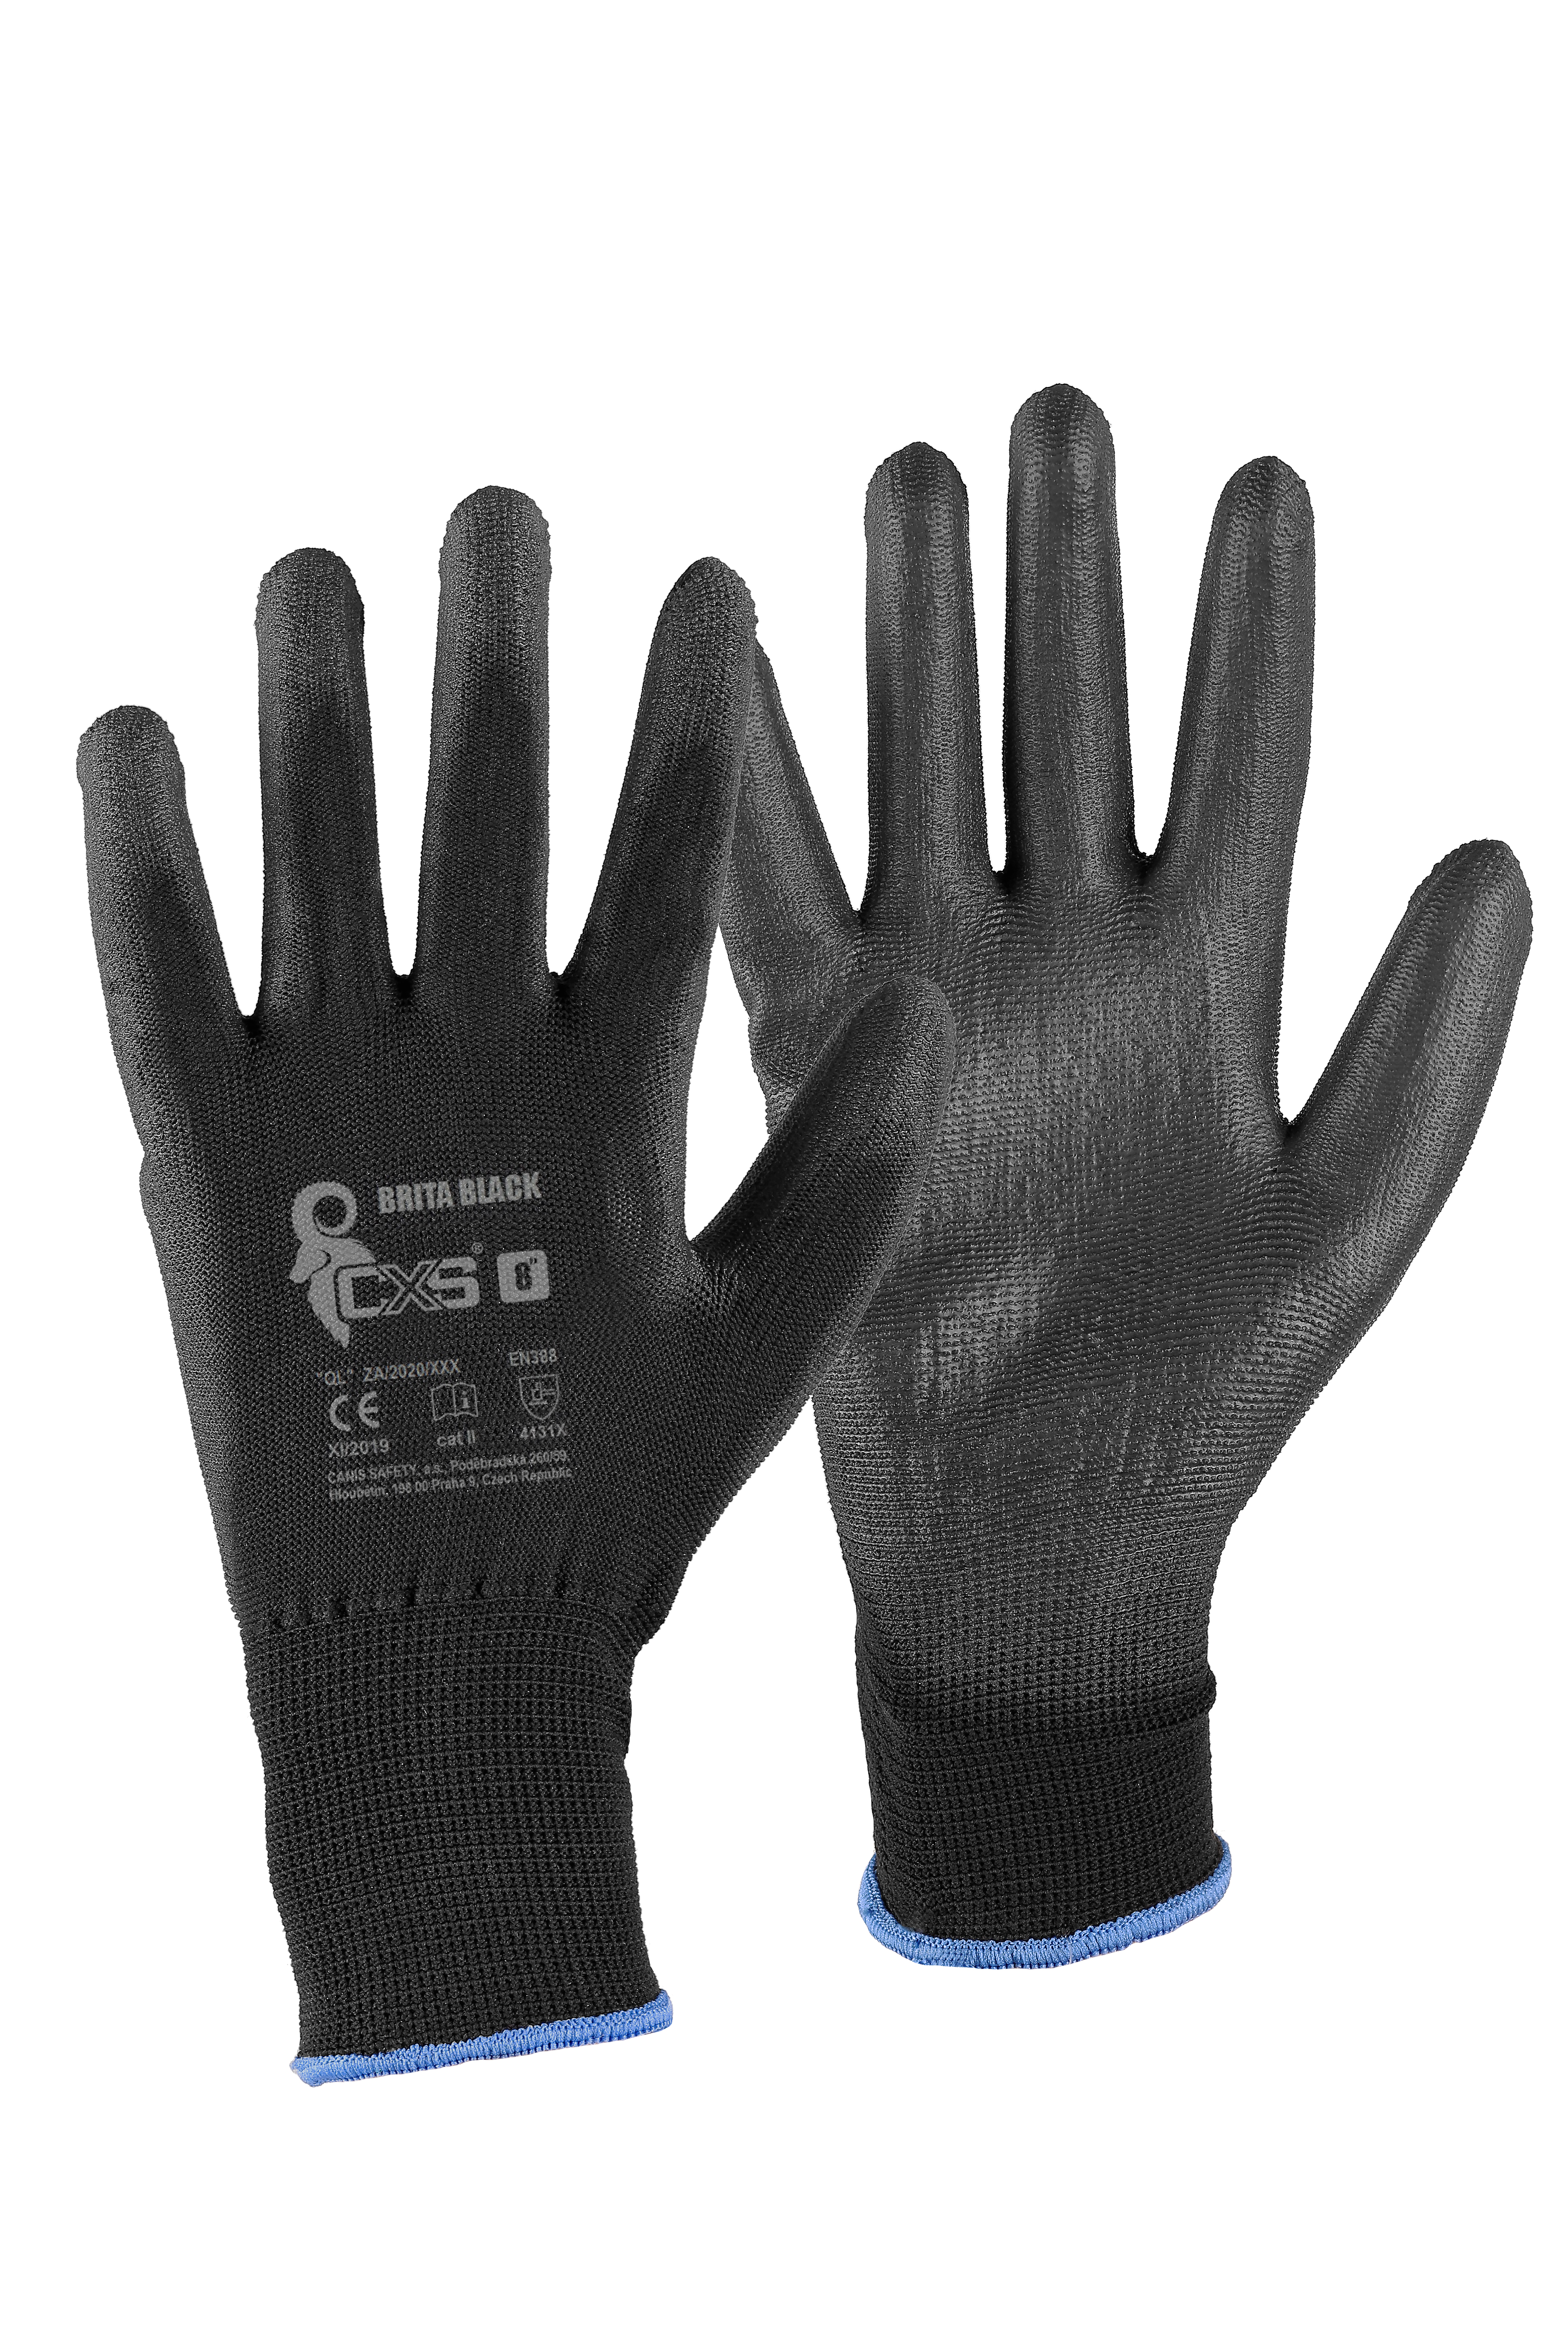 rukavice BRITA BLACK, s PU dlaní a úpletem, velikost 8 0.02 Kg TOP Sklad4 606047 147